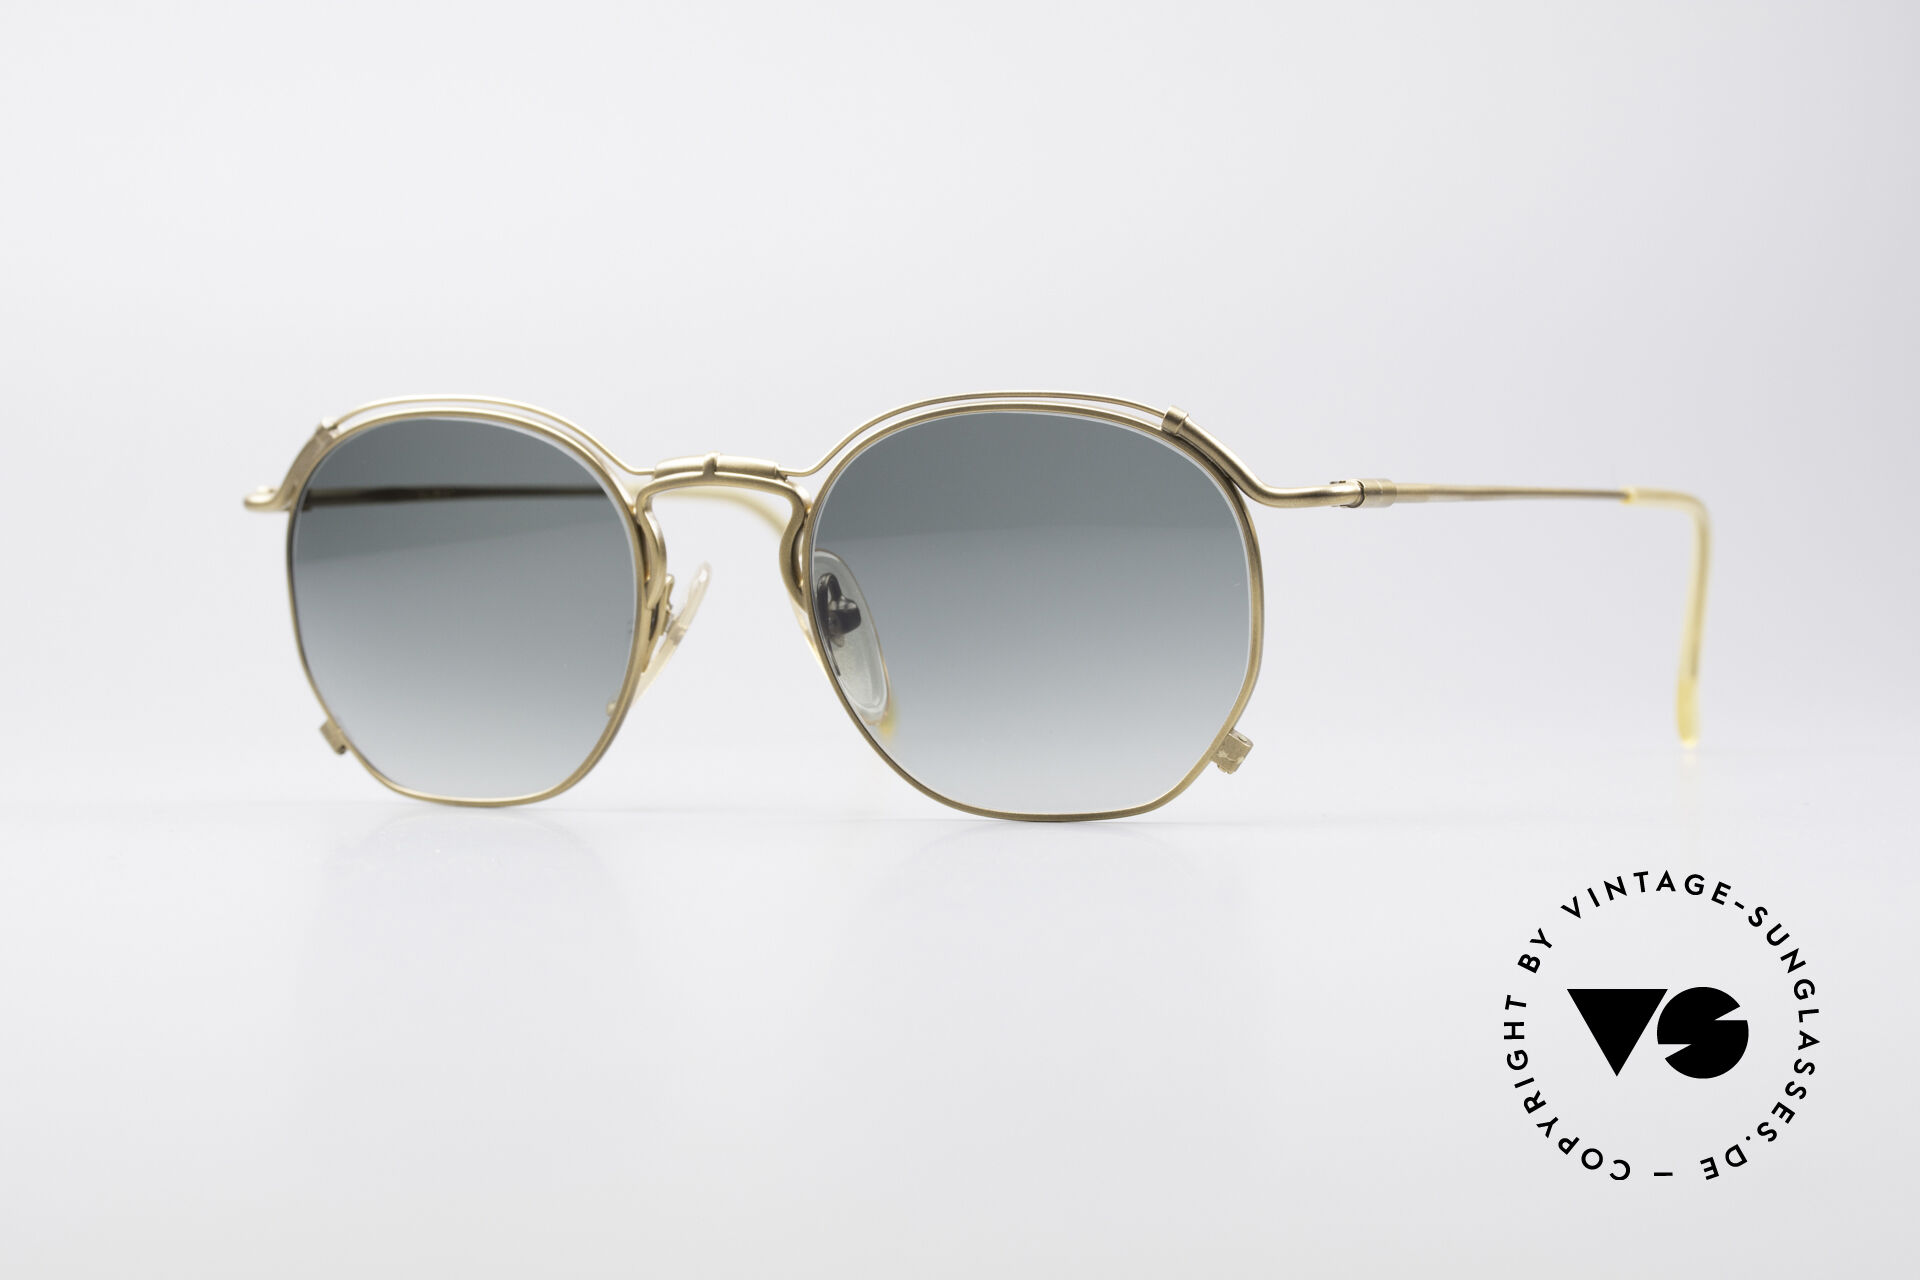 Sunglasses Jean Paul Gaultier 55-2171 90's Vintage Designer Shades